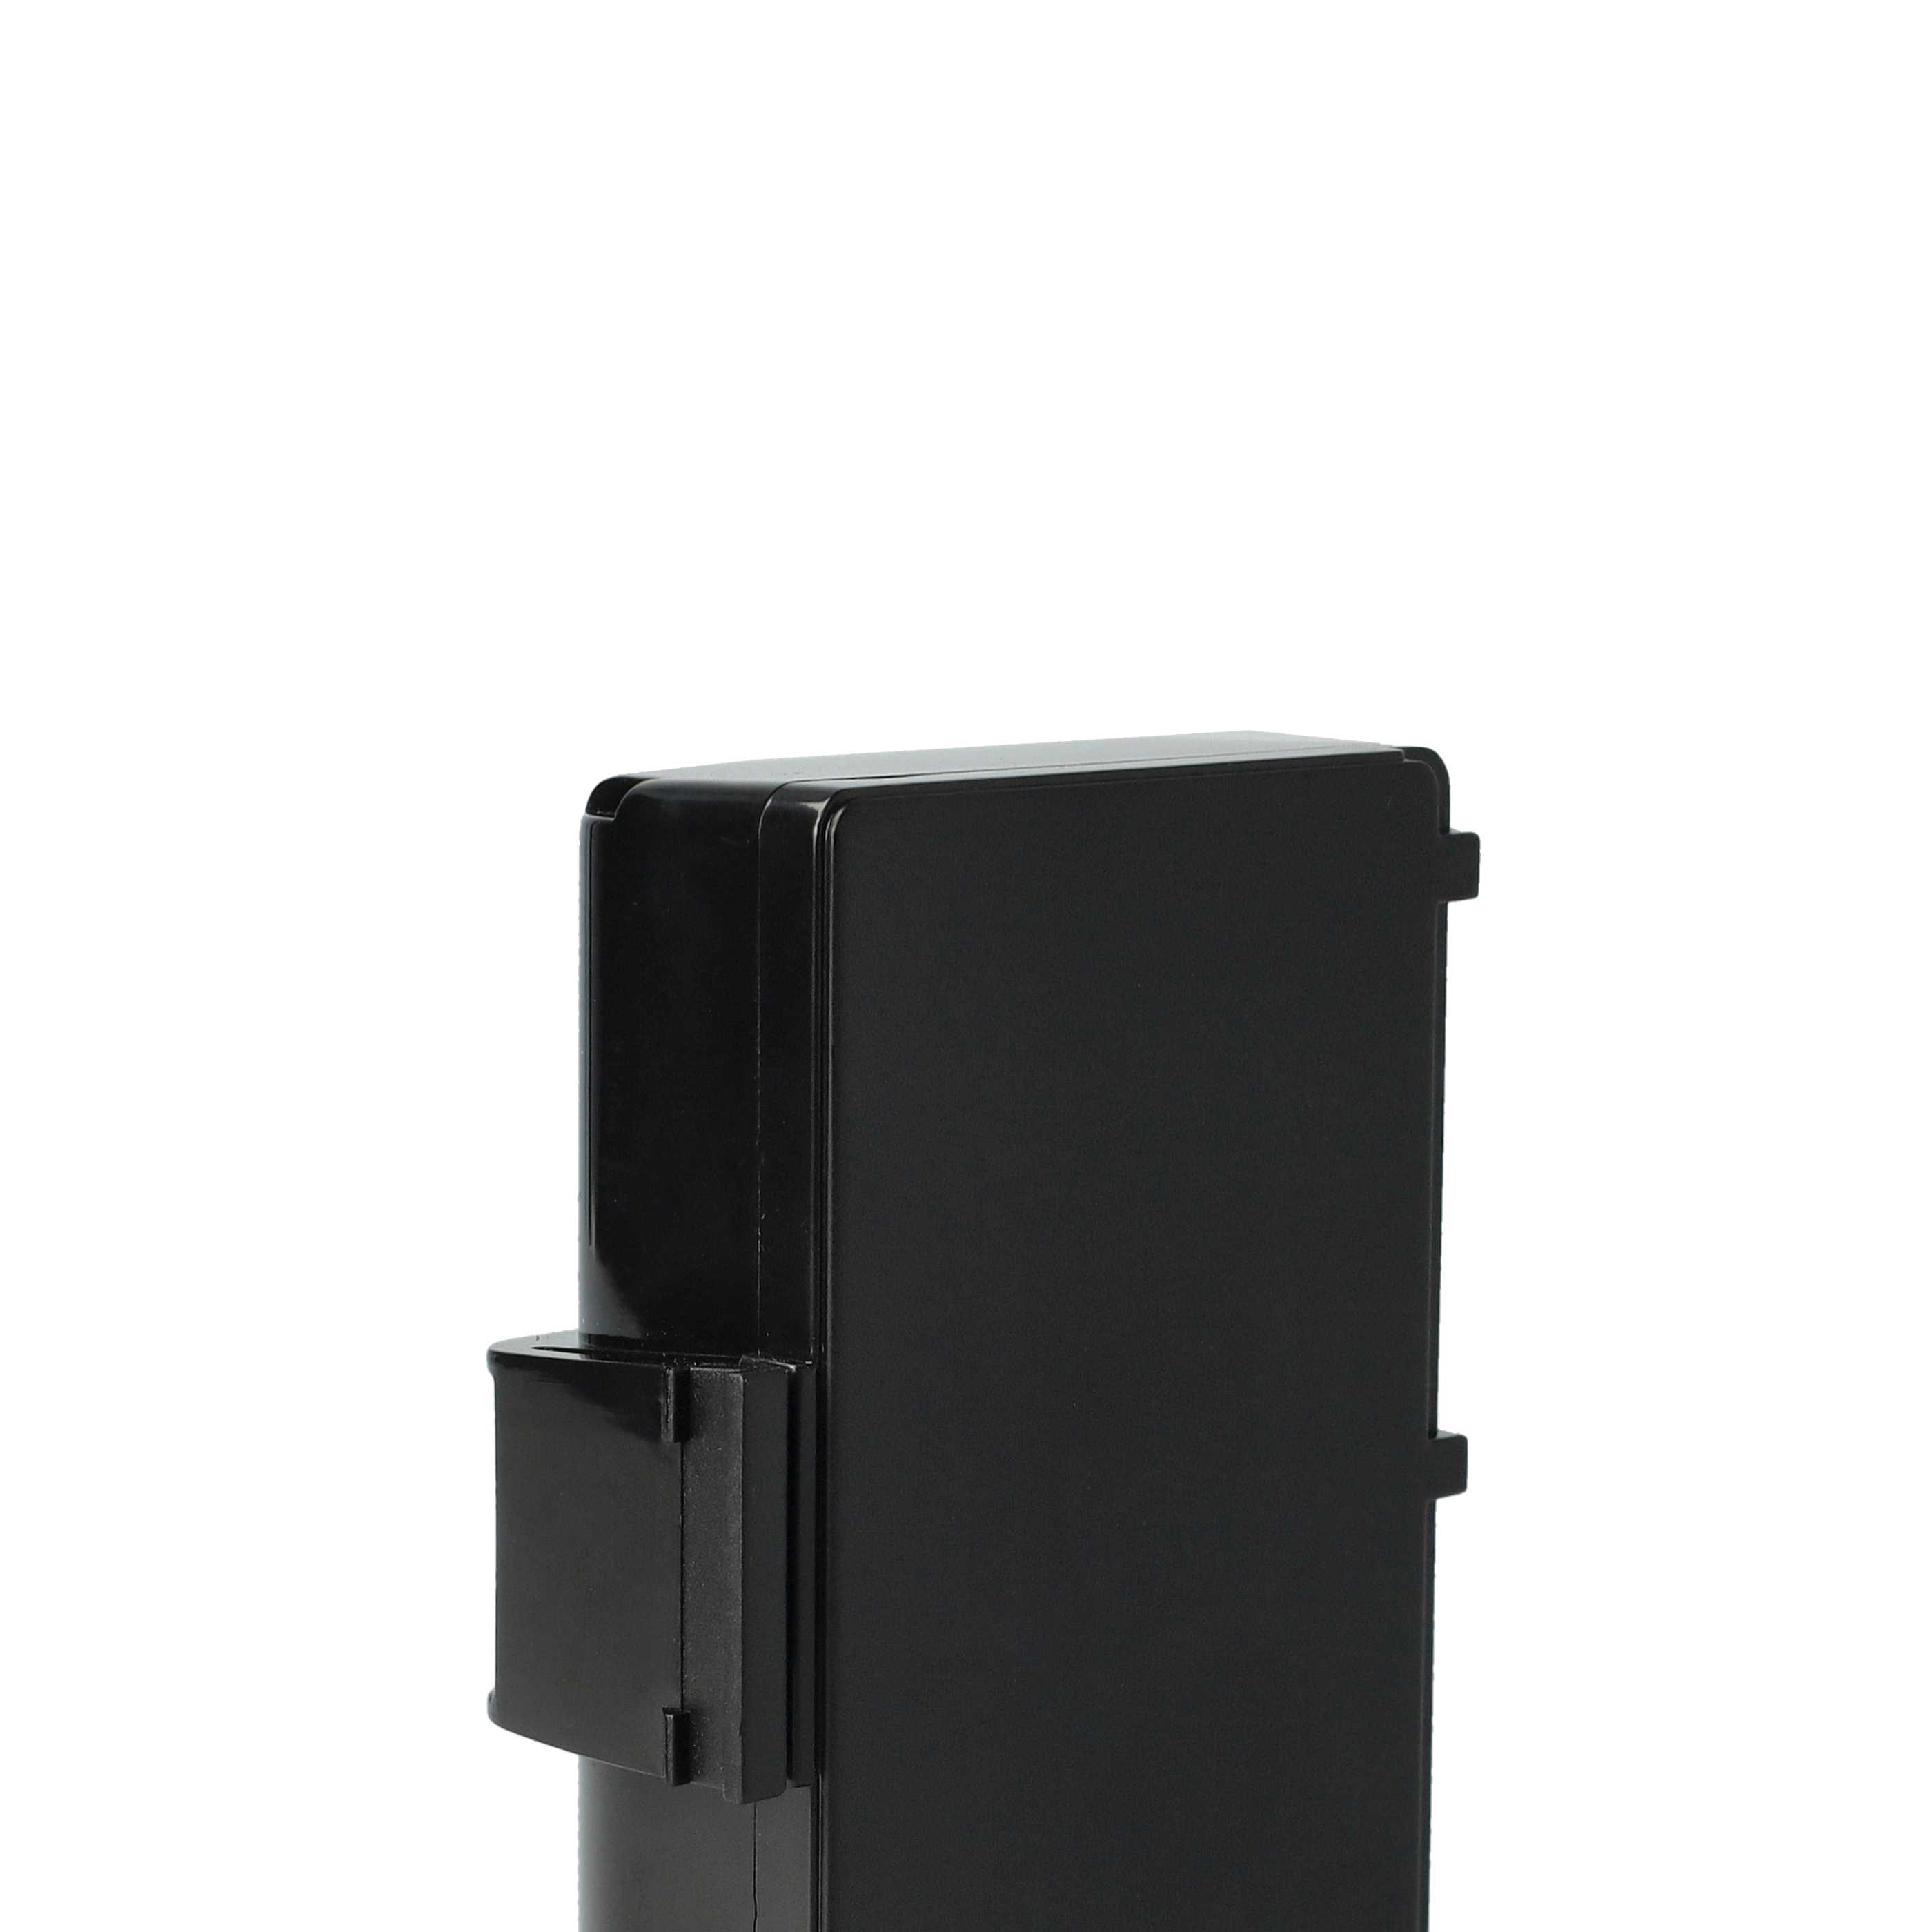 Printer Battery Replacement for Zebra AT16004, BTRY-MPP-34MA1-01, BTRY-MPP-34MAHC1-01 - 2200mAh 7.4V Li-Ion